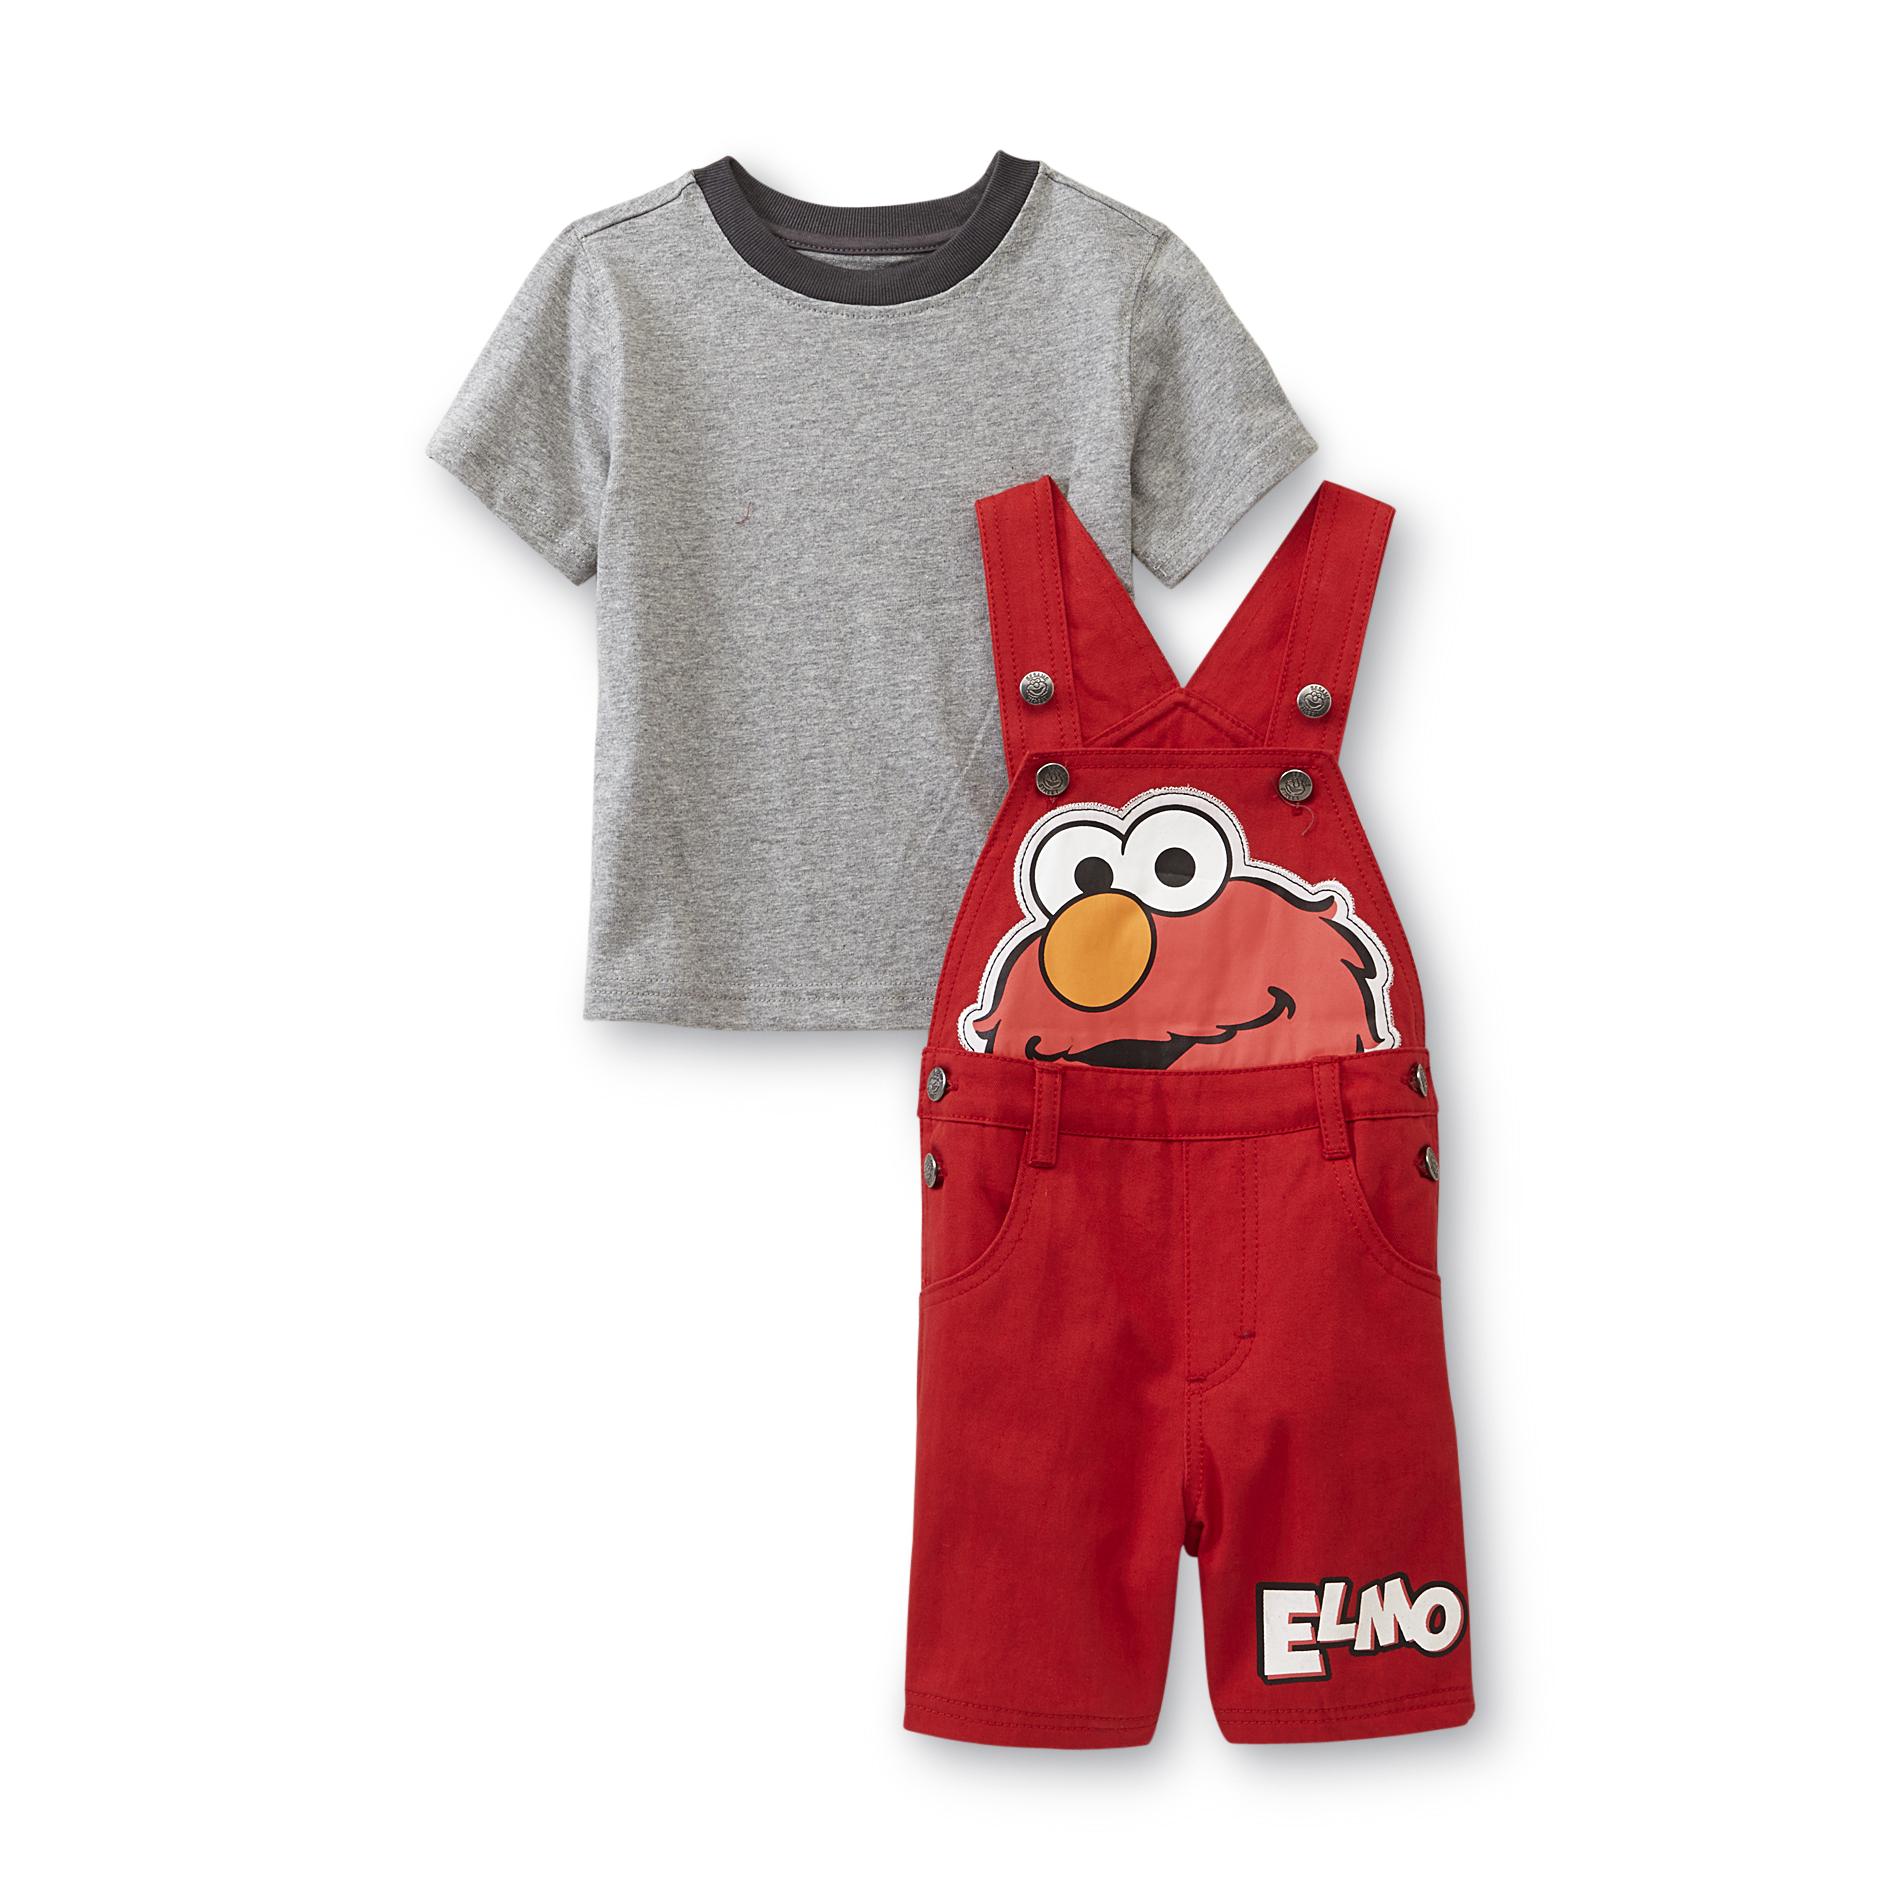 Sesame Street Infant Boy's Shortalls & T-Shirt - Elmo